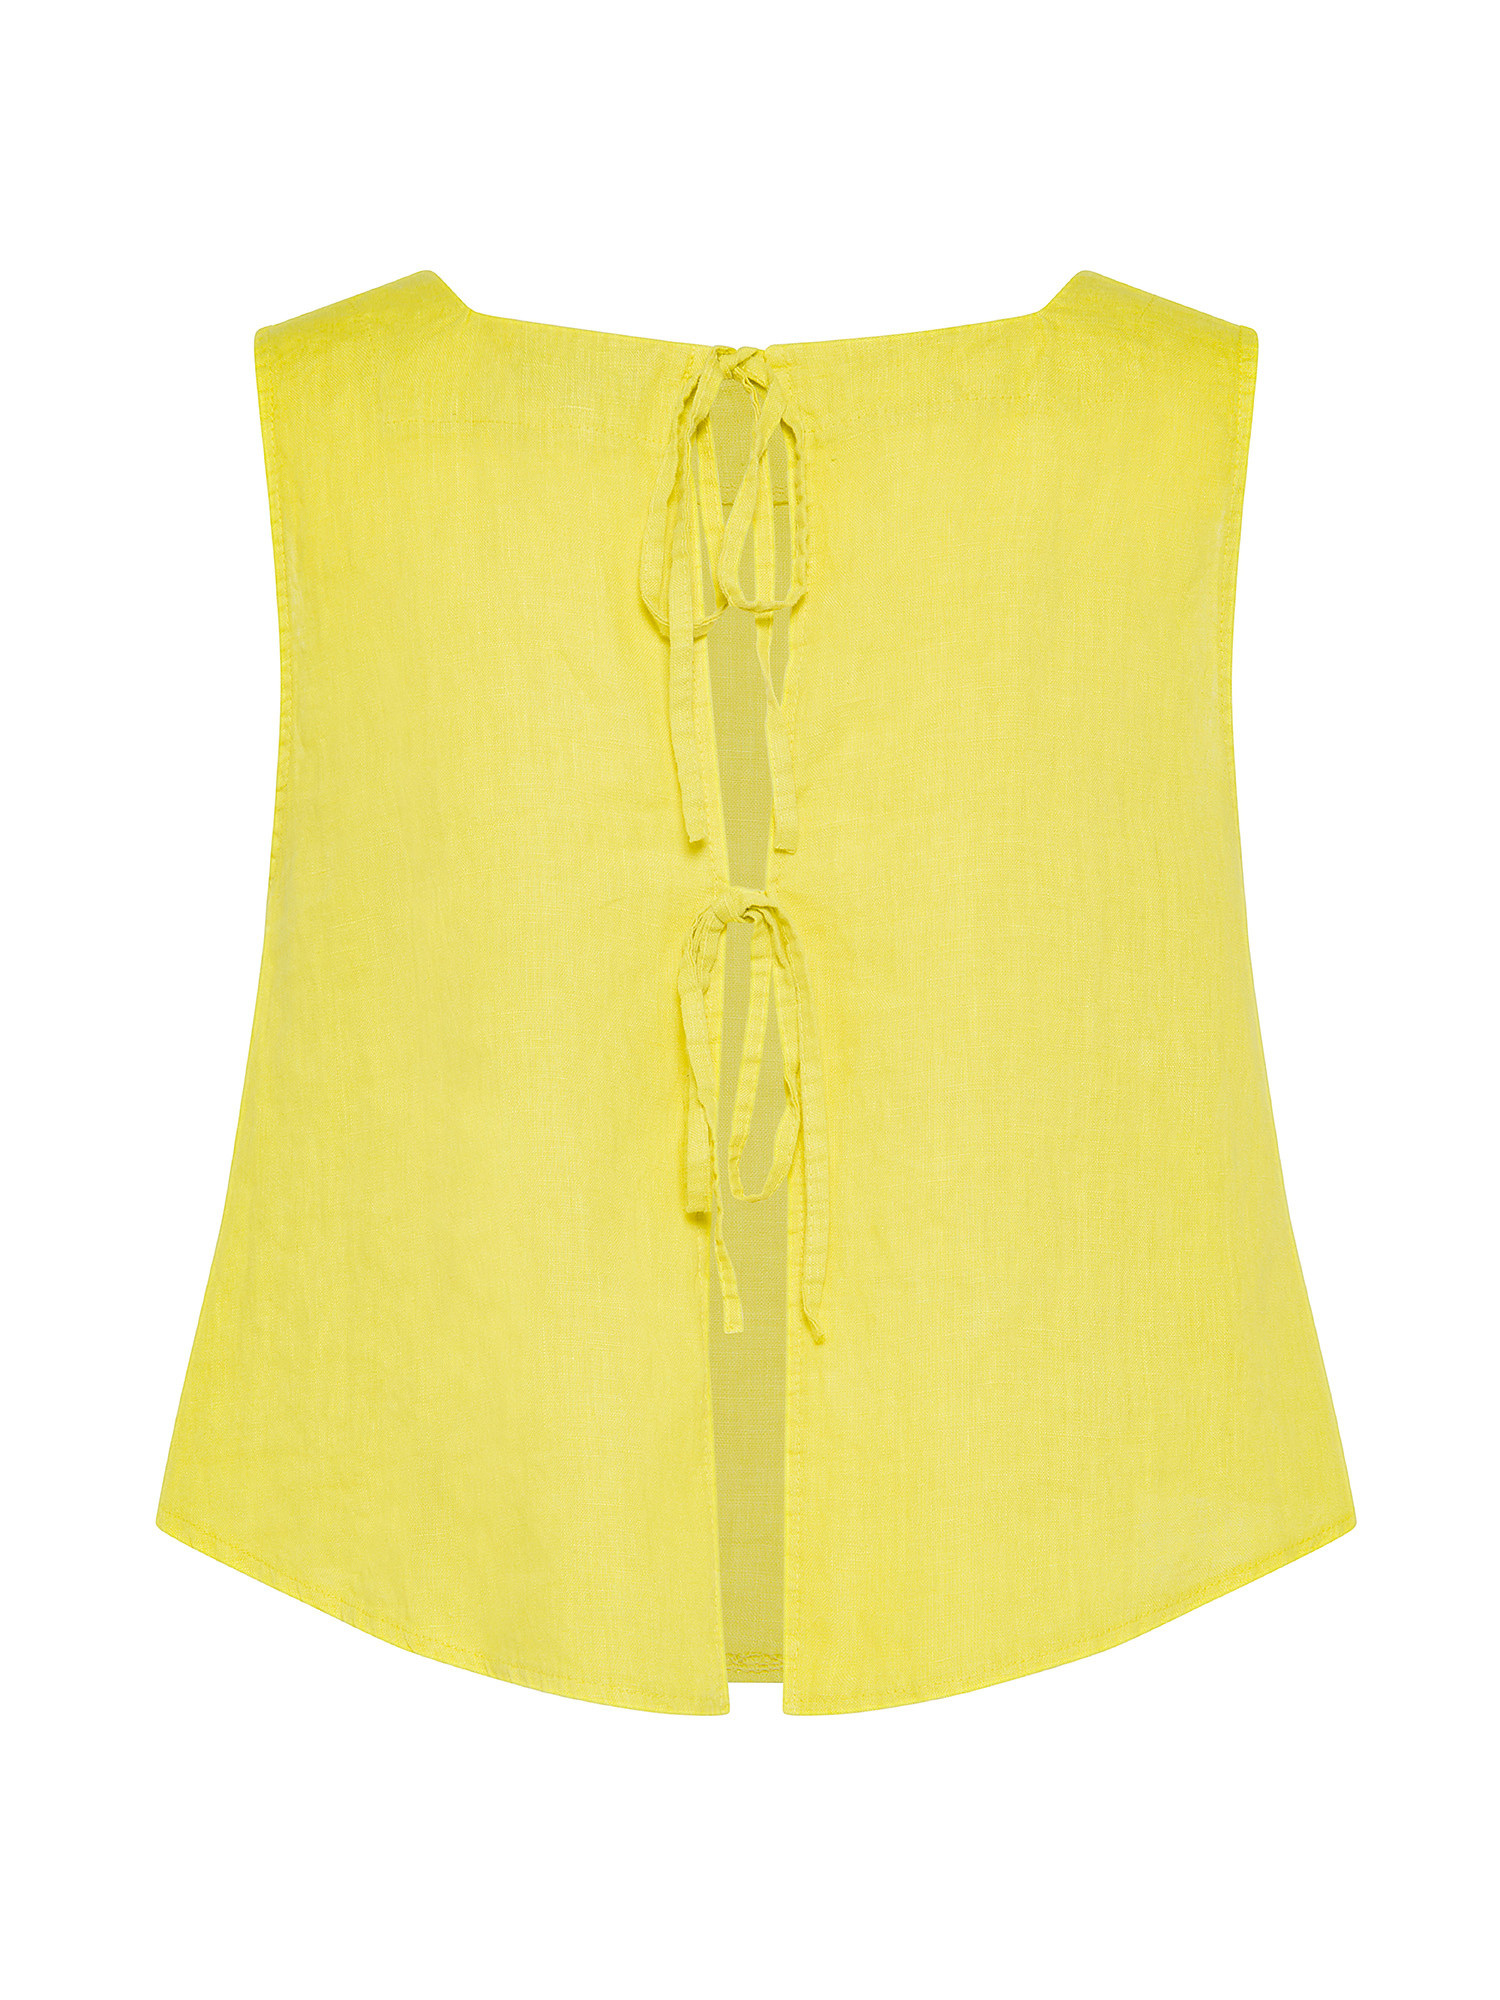 Koan - Linen top, Yellow, large image number 1